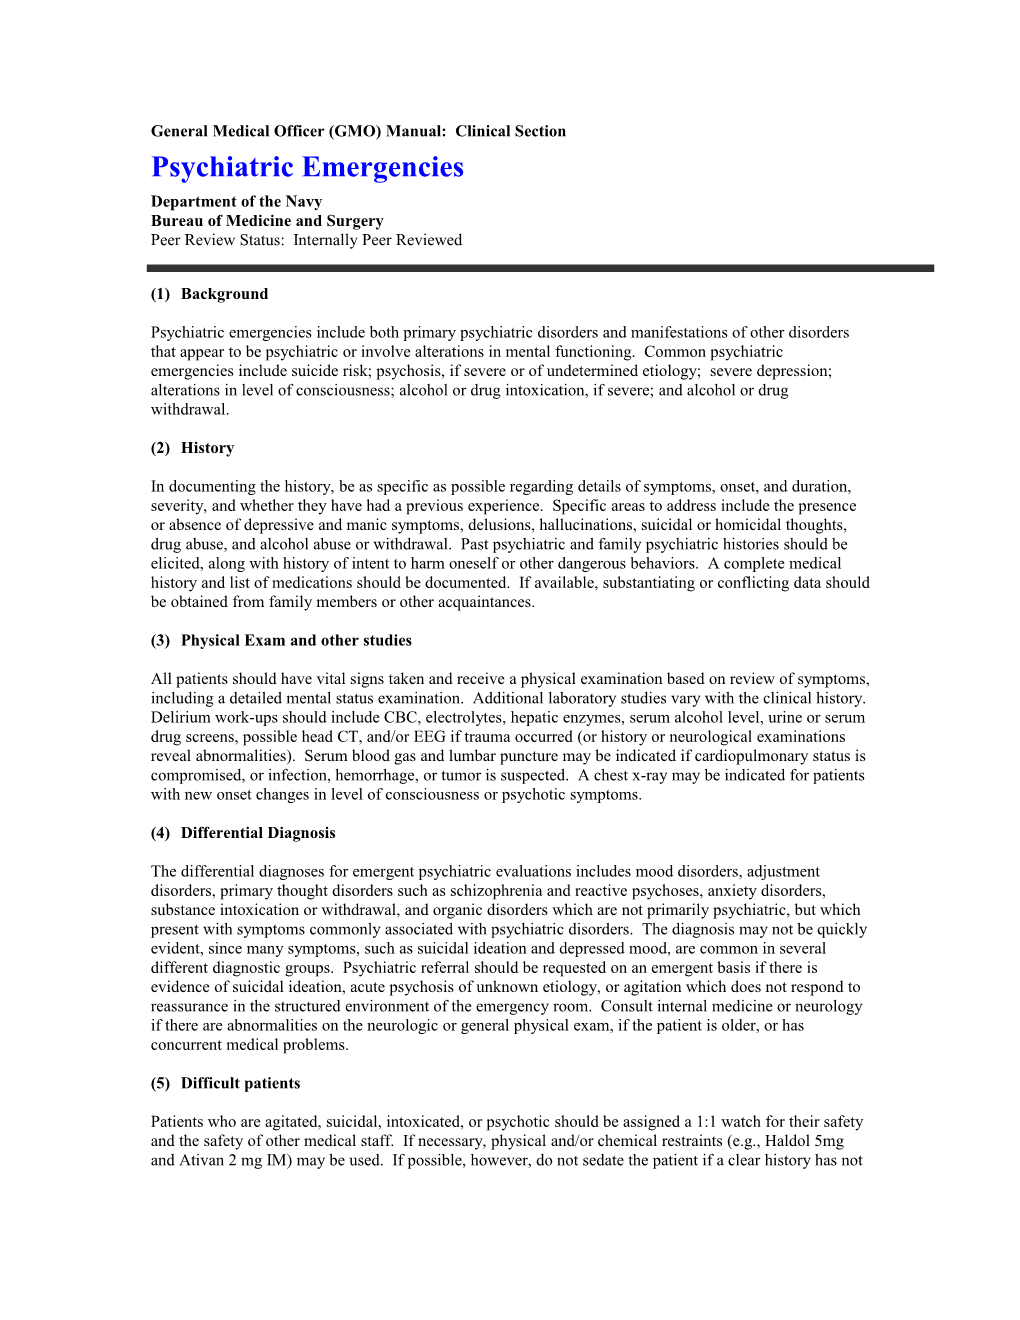 General Medical Officer (GMO) Manual: Psychiatry Emergencies